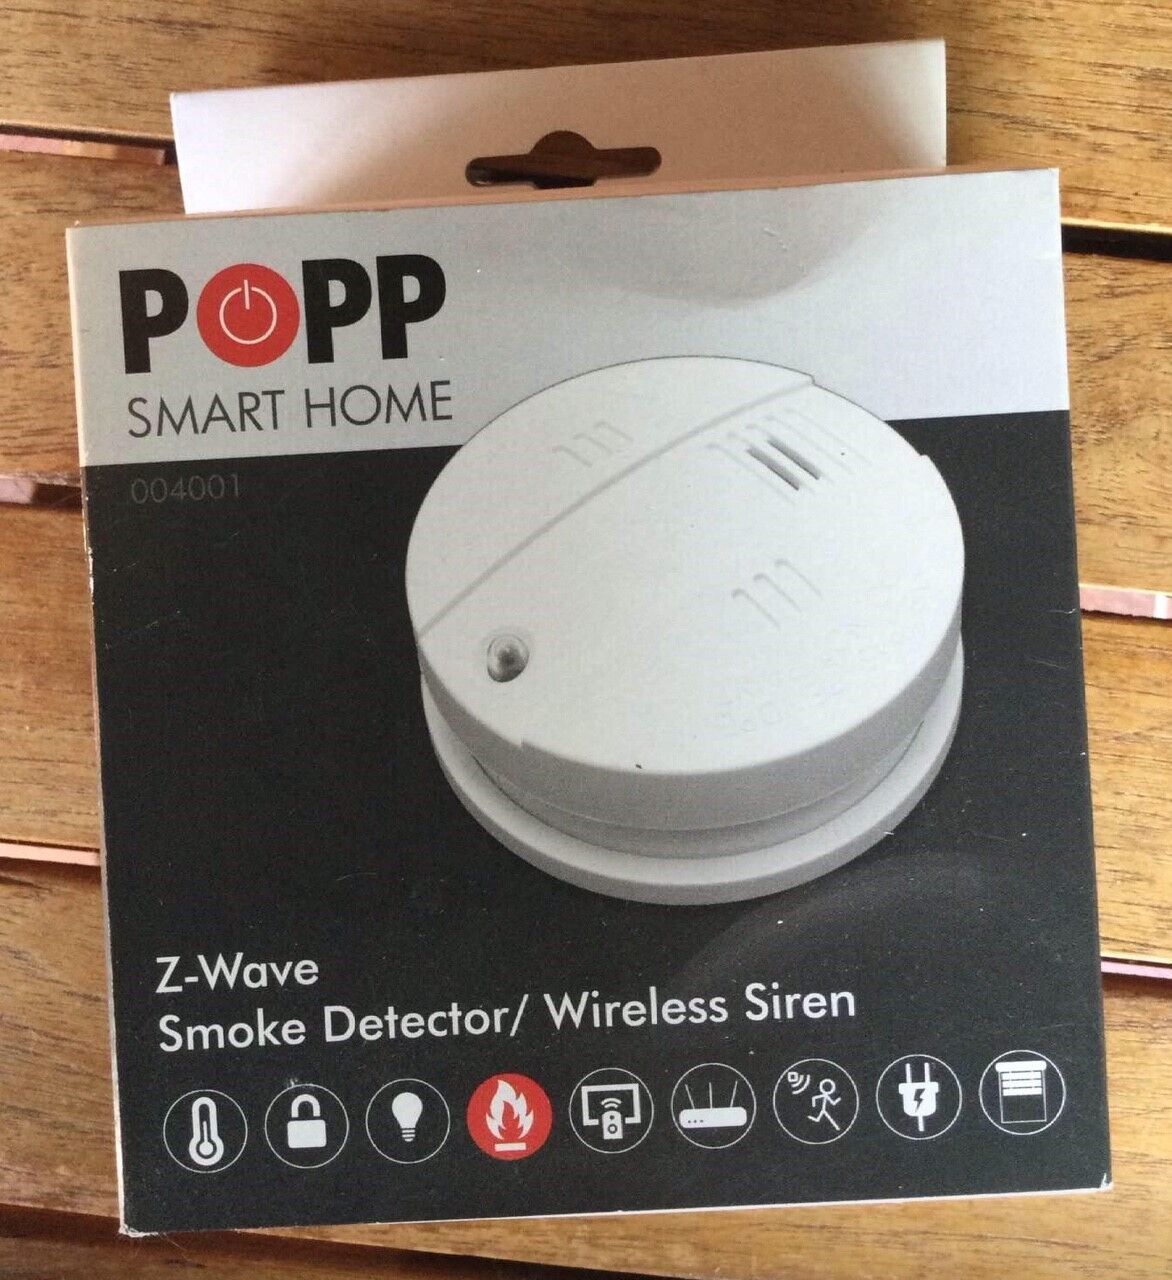 Z-WAVE Smoke Detektor/Wireless Siren Popp